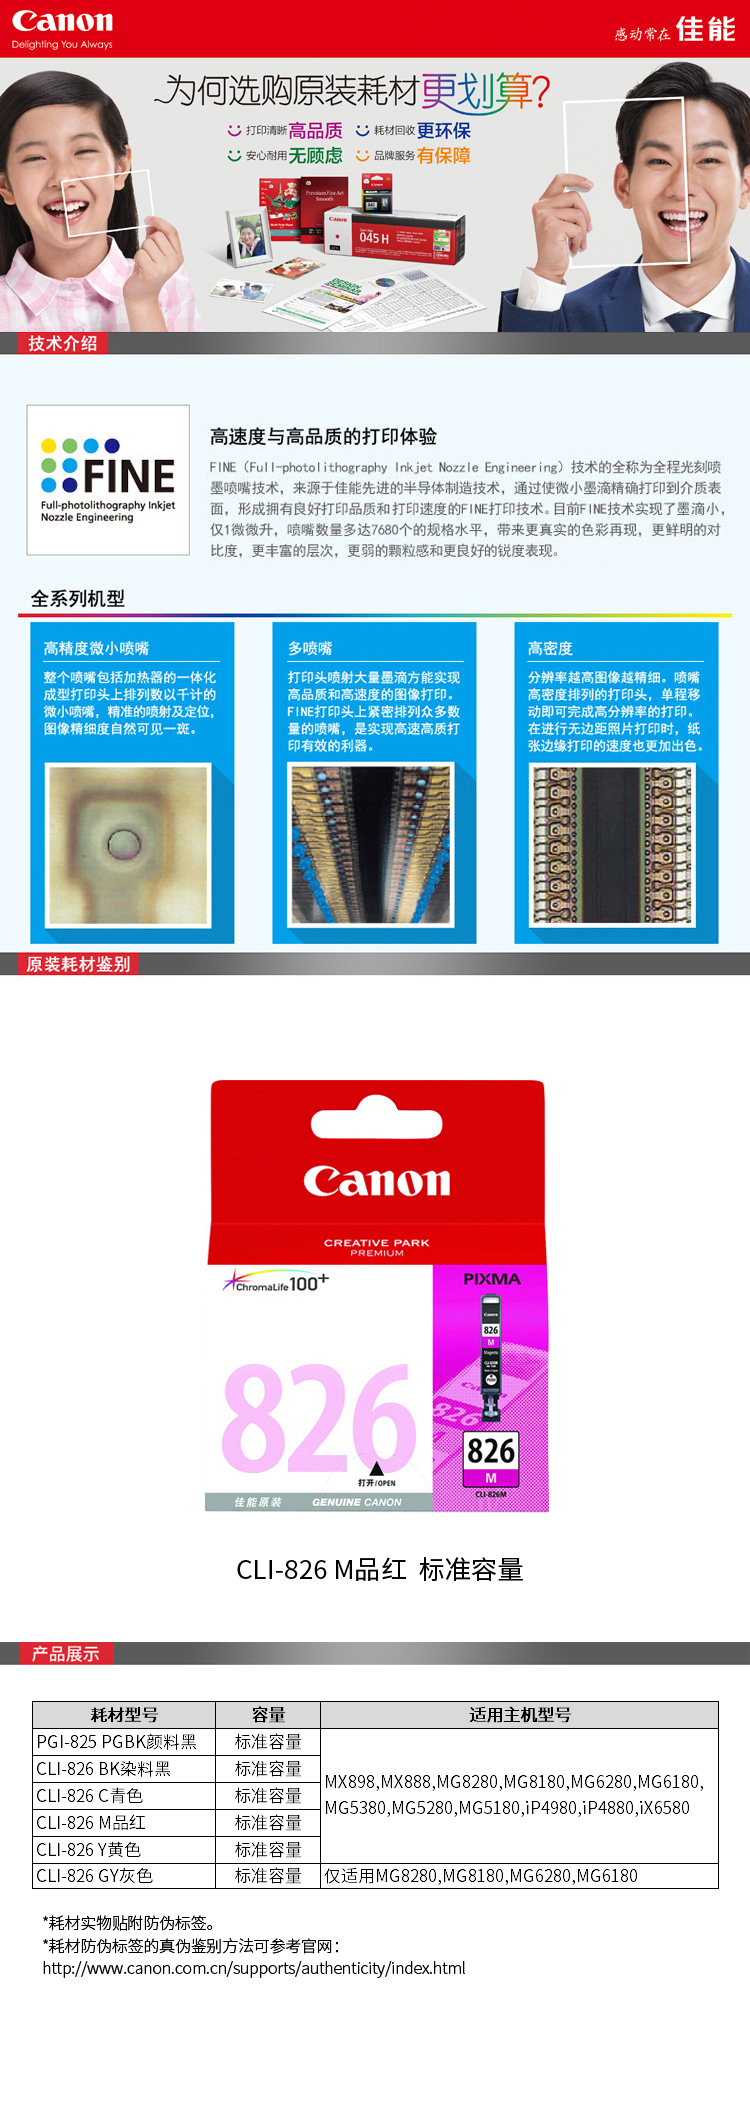 /image/catalog/collector/jingdong/2020/06/30285738-1c95225b12b54ddda654033487bcc82c.jpg